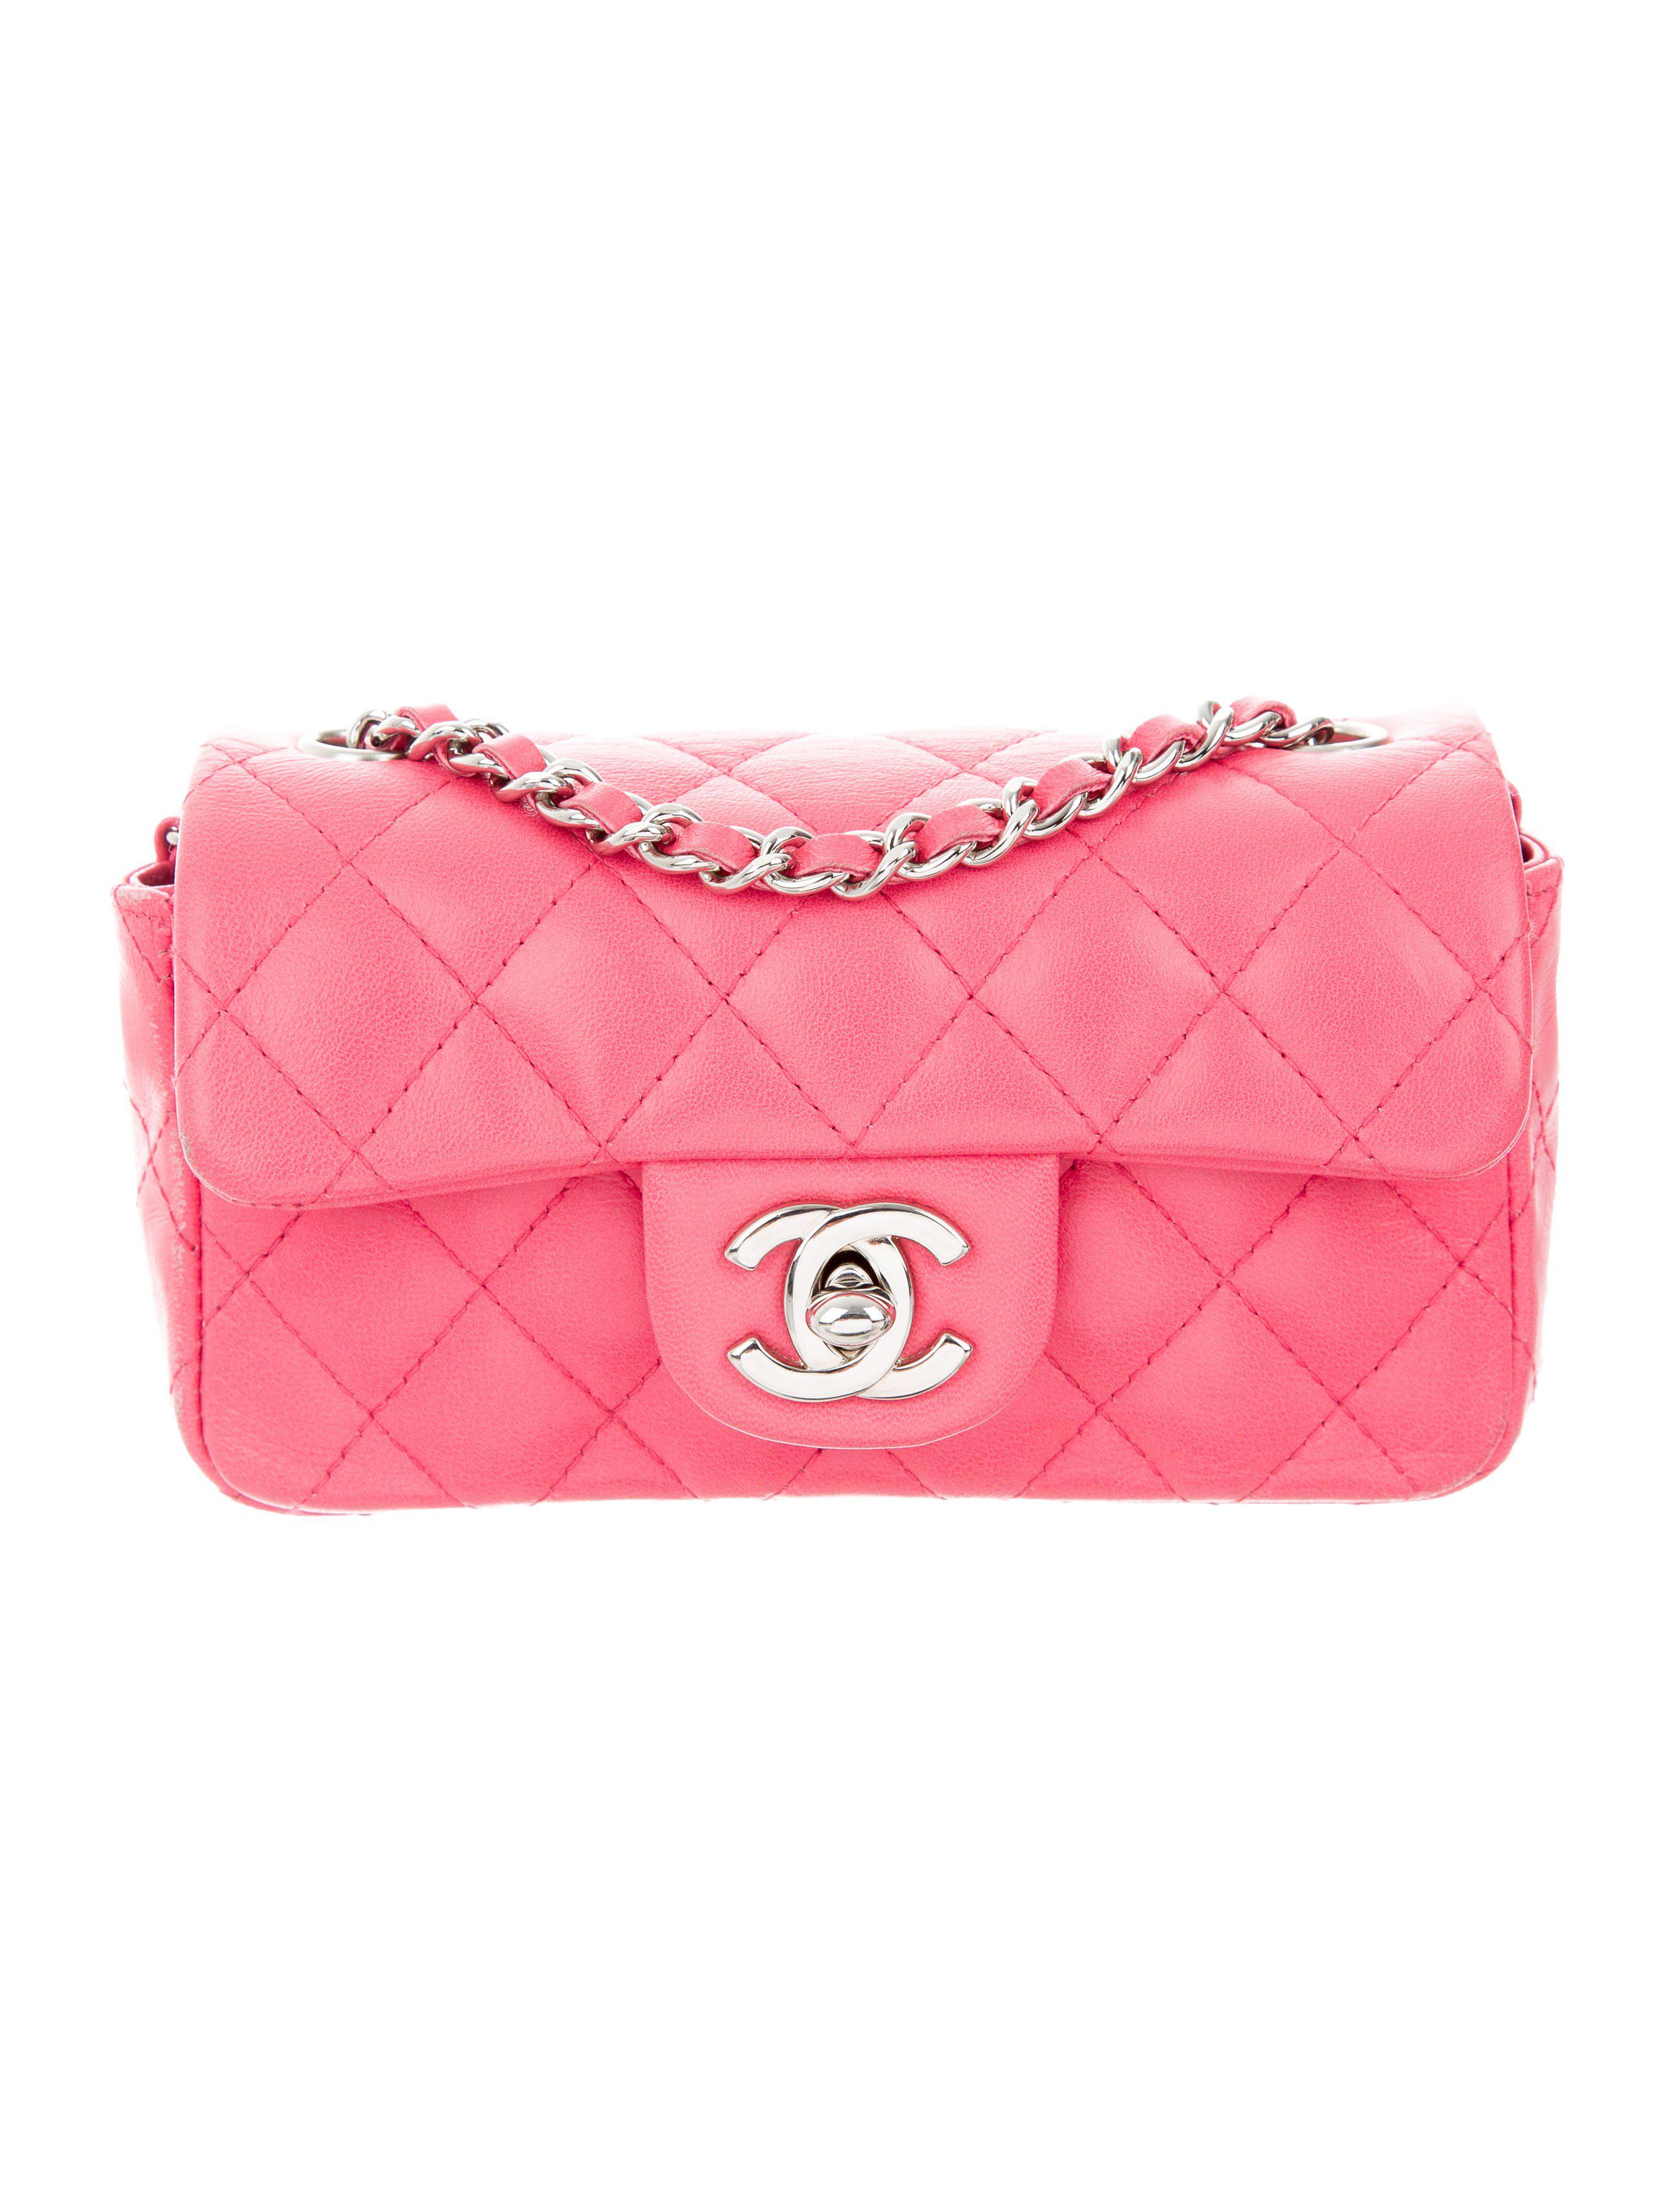 Pink Chanel Handbags For Women Keweenaw Bay Indian Community